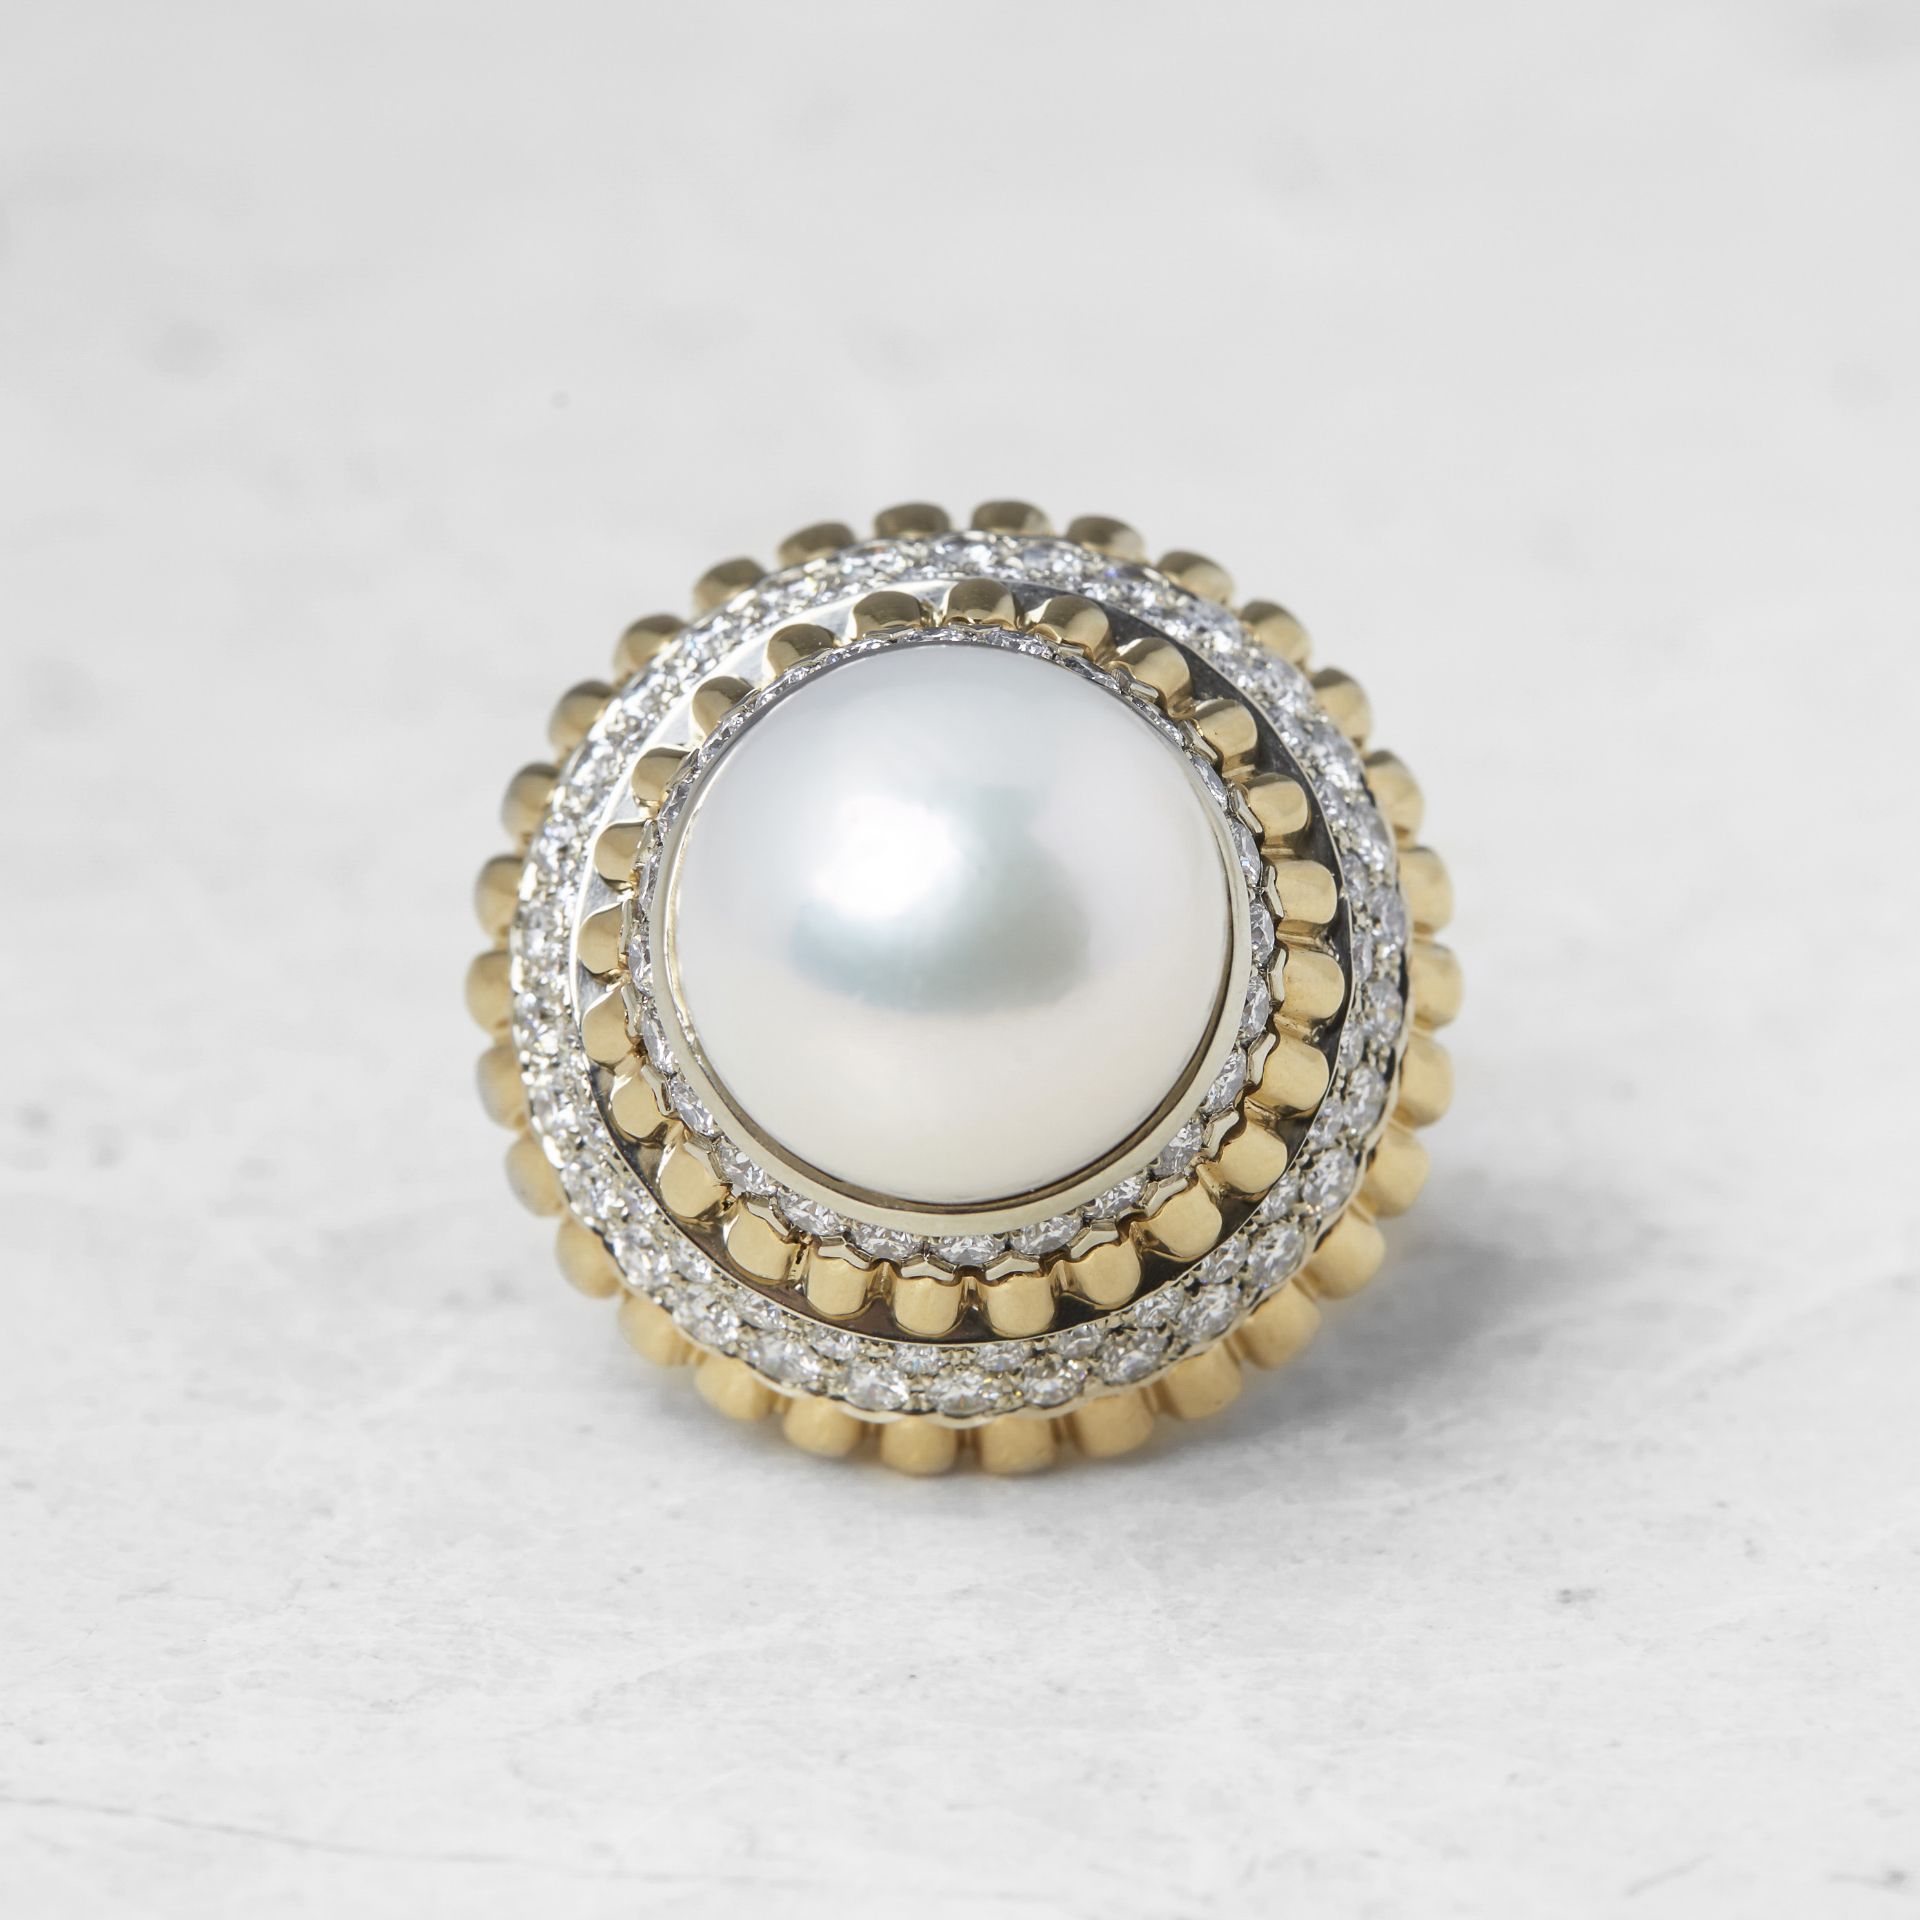 Van Cleef & Arpels 18k Yellow Gold Pearl & Diamond Ring - Image 11 of 28